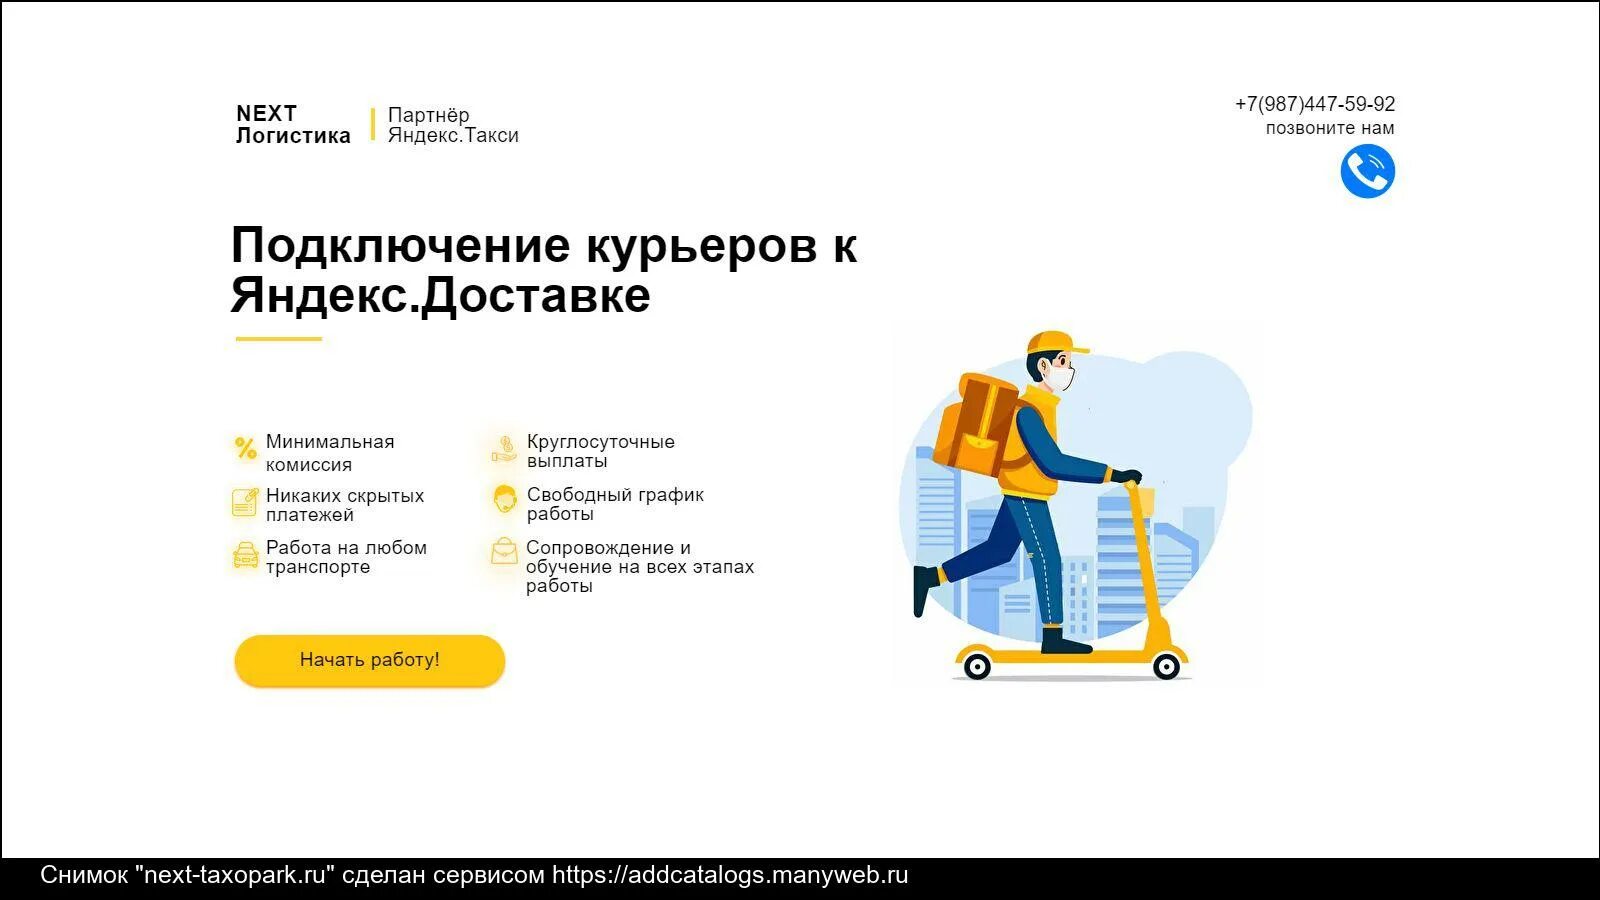 Next Taxi (Некст такси). Подключение на курьер. Картинка подключения курьеров к Яндексу.